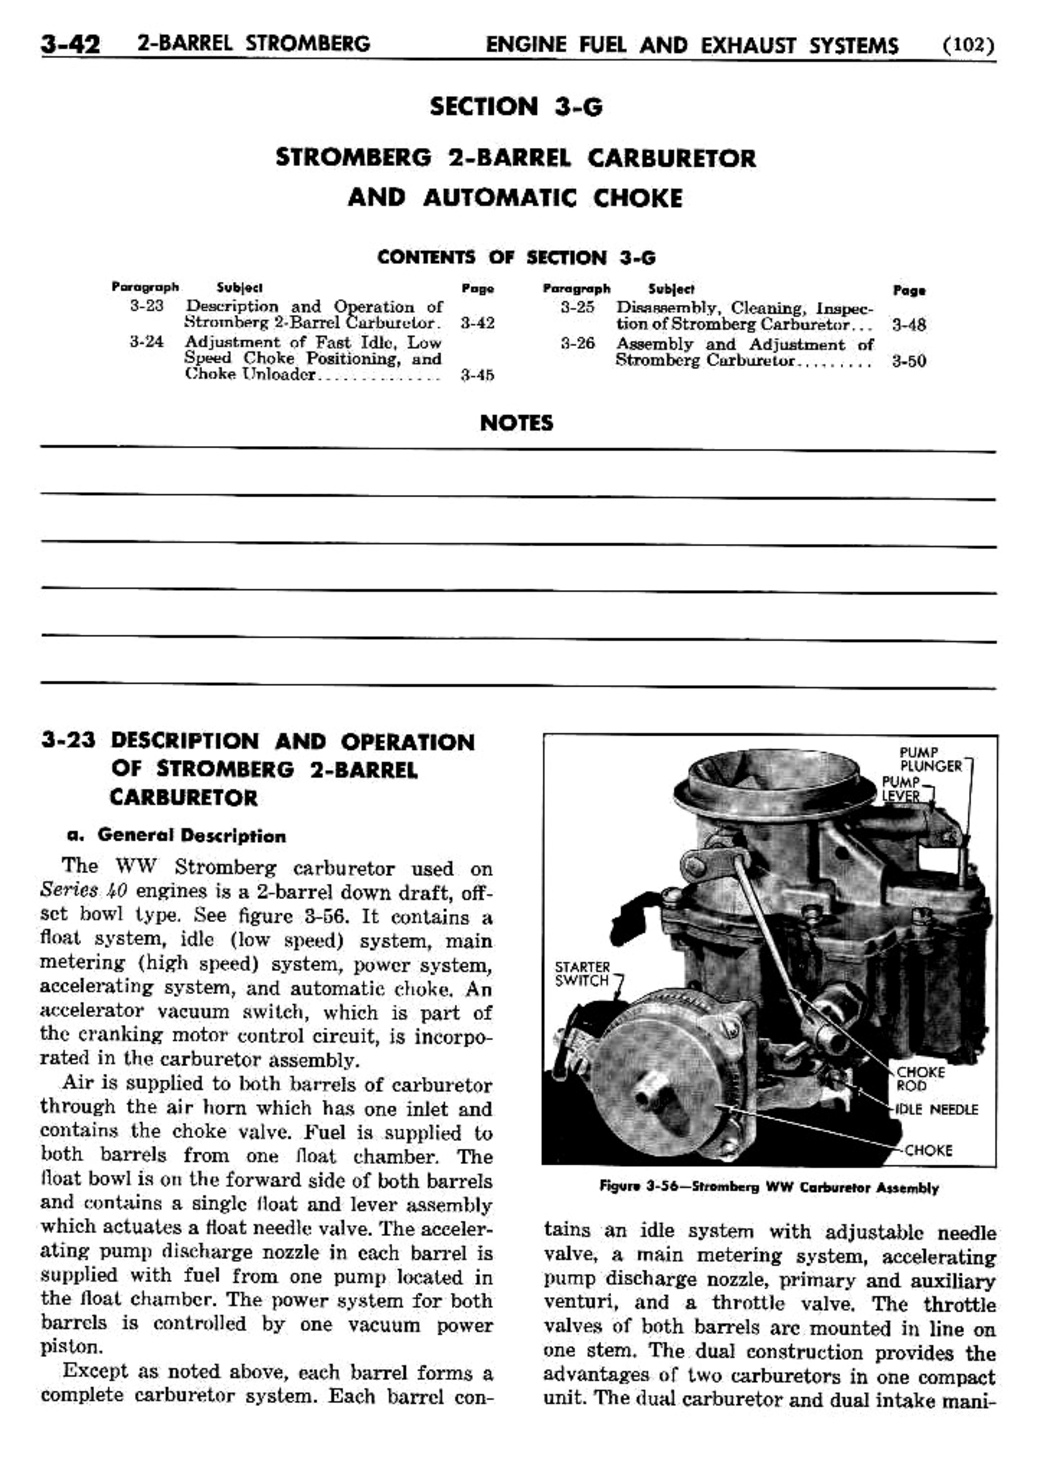 n_04 1956 Buick Shop Manual - Engine Fuel & Exhaust-042-042.jpg